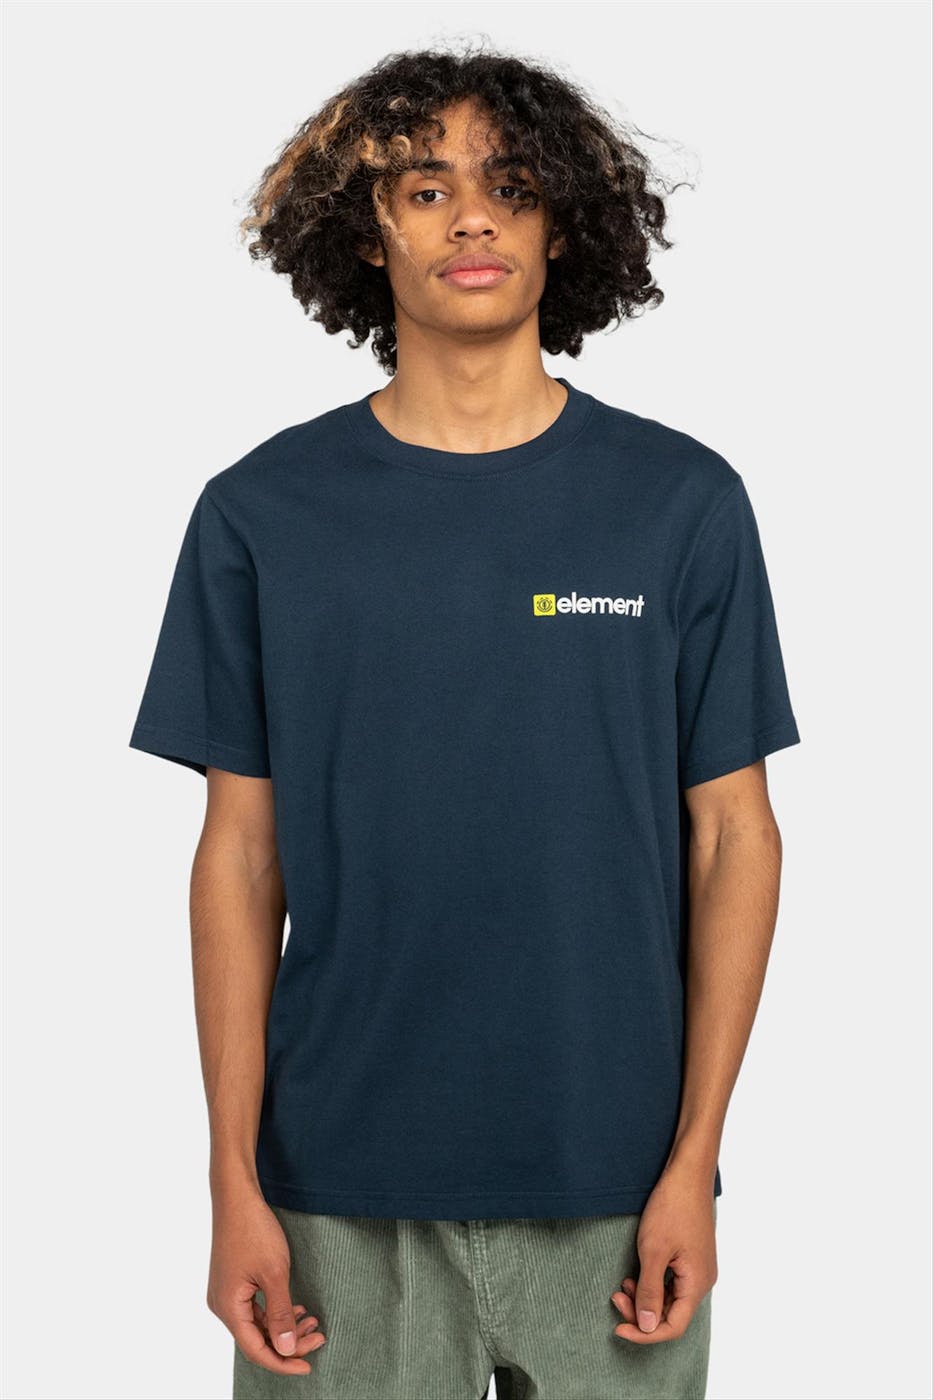 Element - Donkerblauwe Joint T-shirt